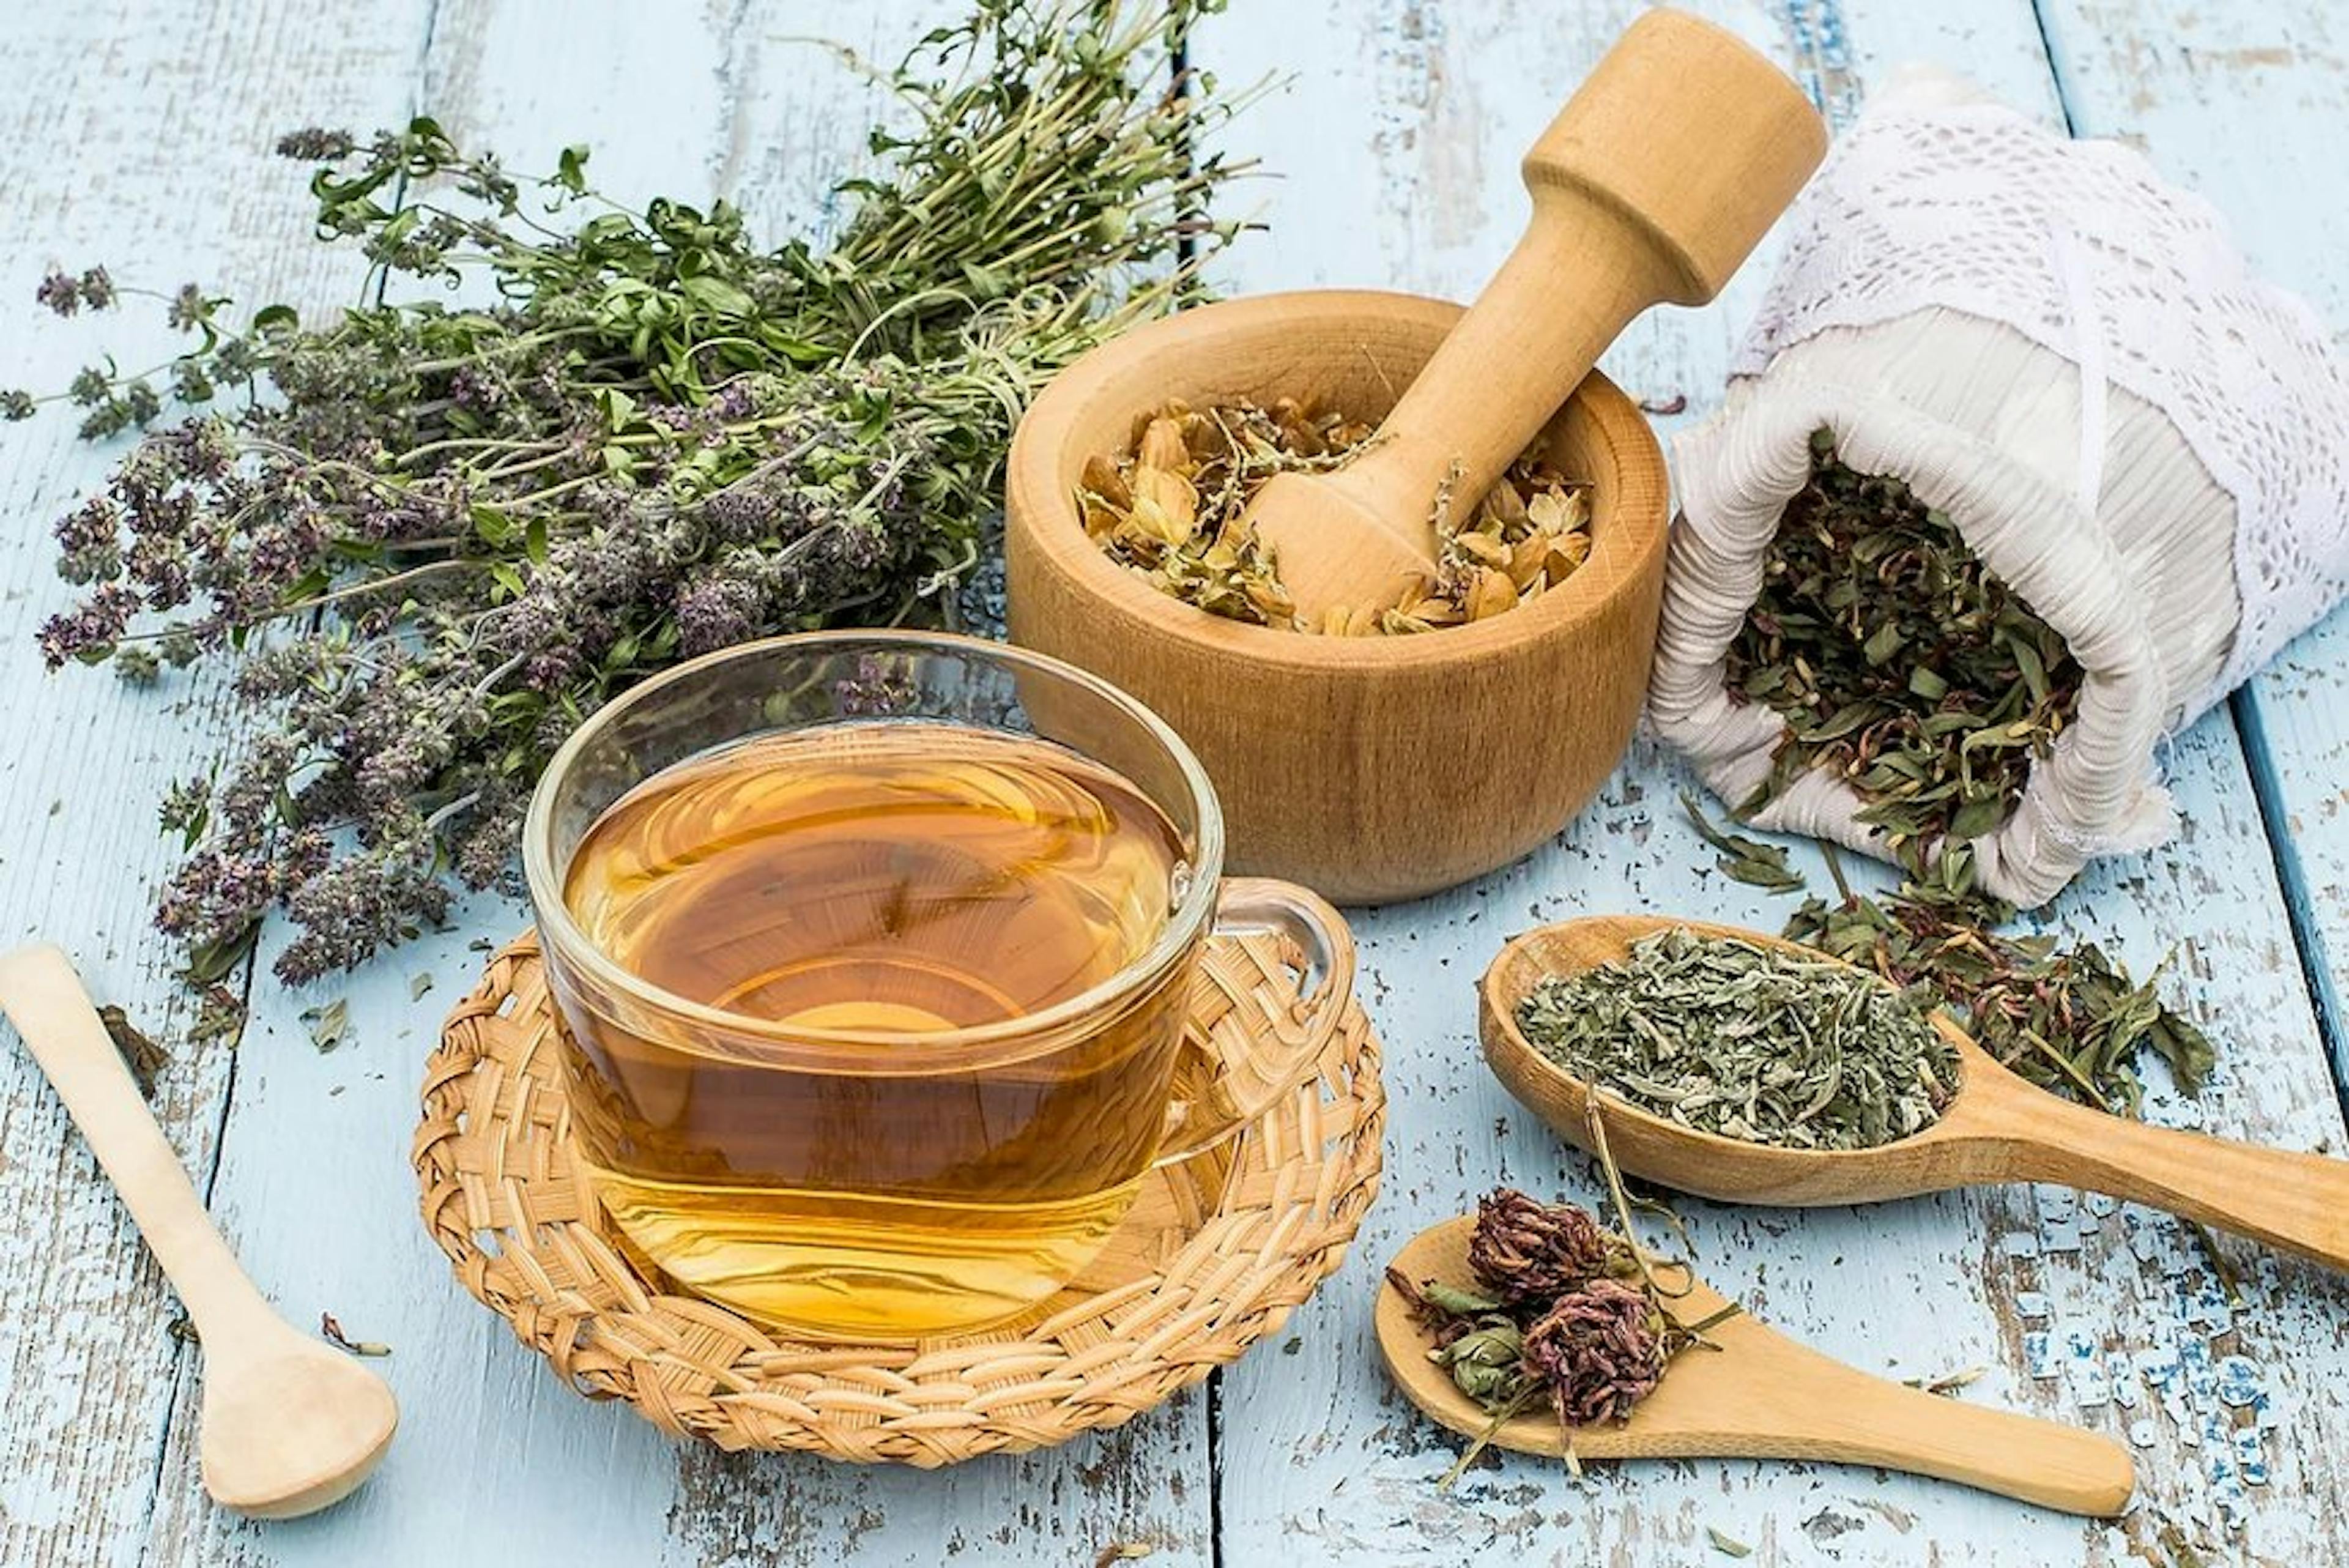 Herbal medicines and Teas